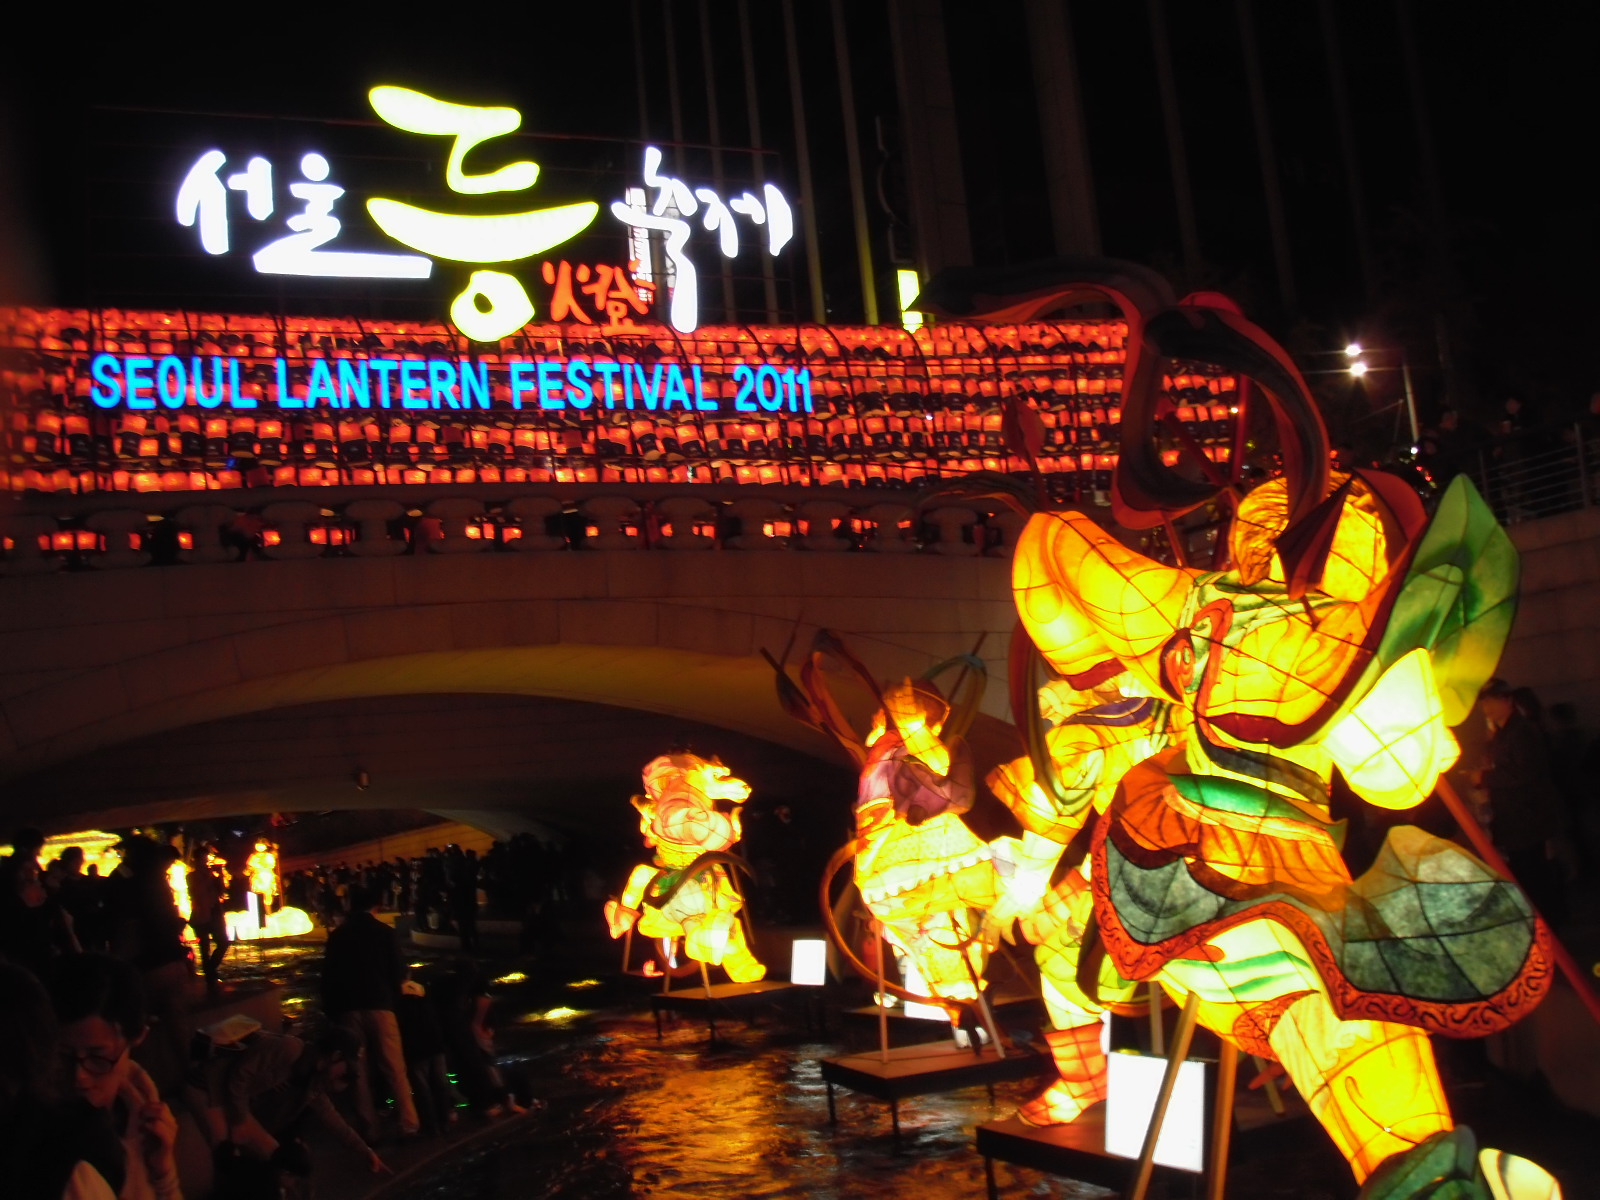 Seoul Lantern Festival - Wikipedia